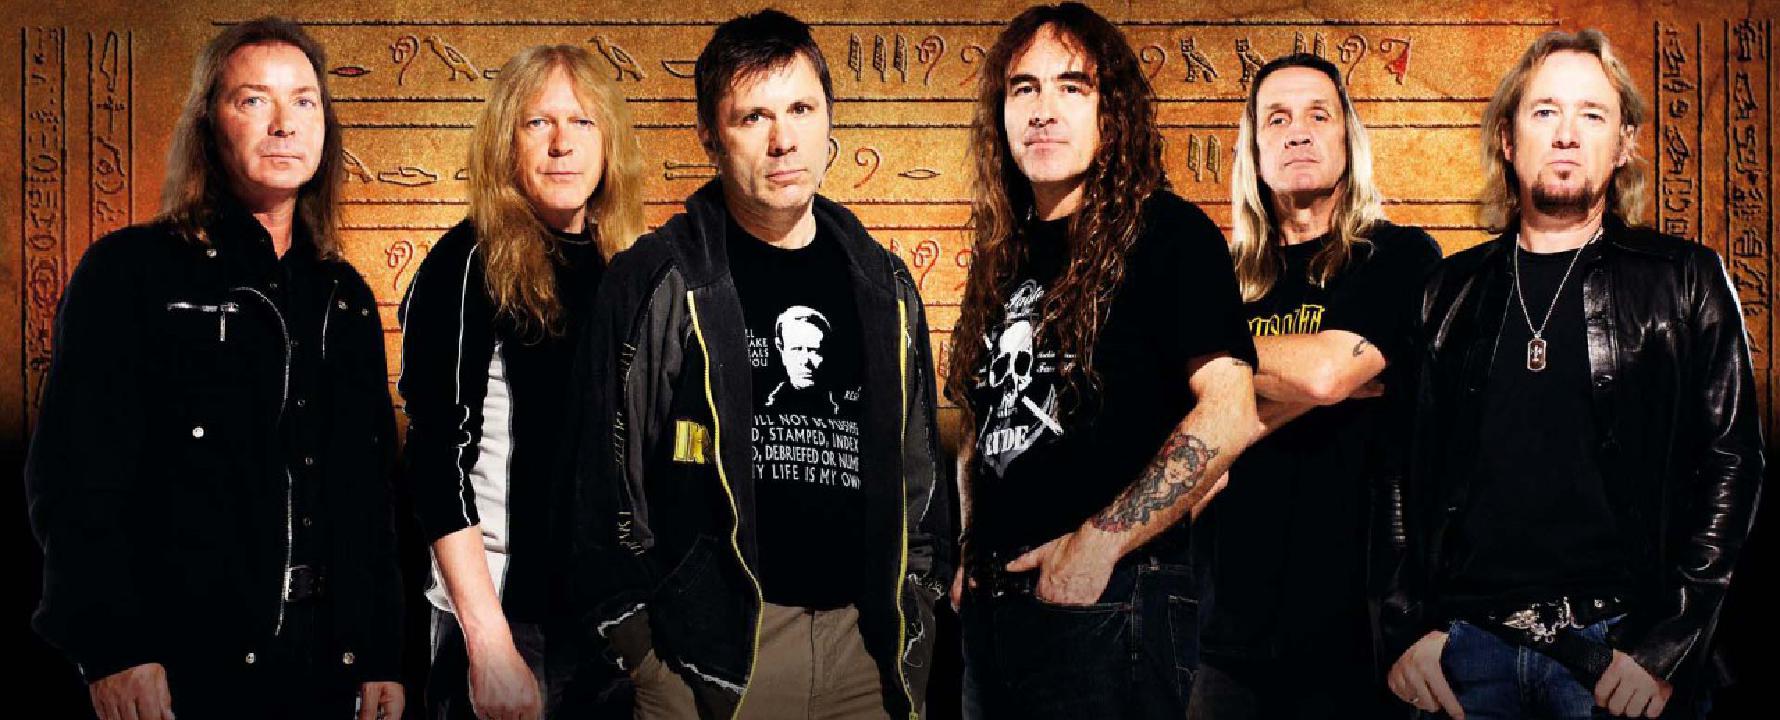 Fotografia promocional de Iron Maiden.